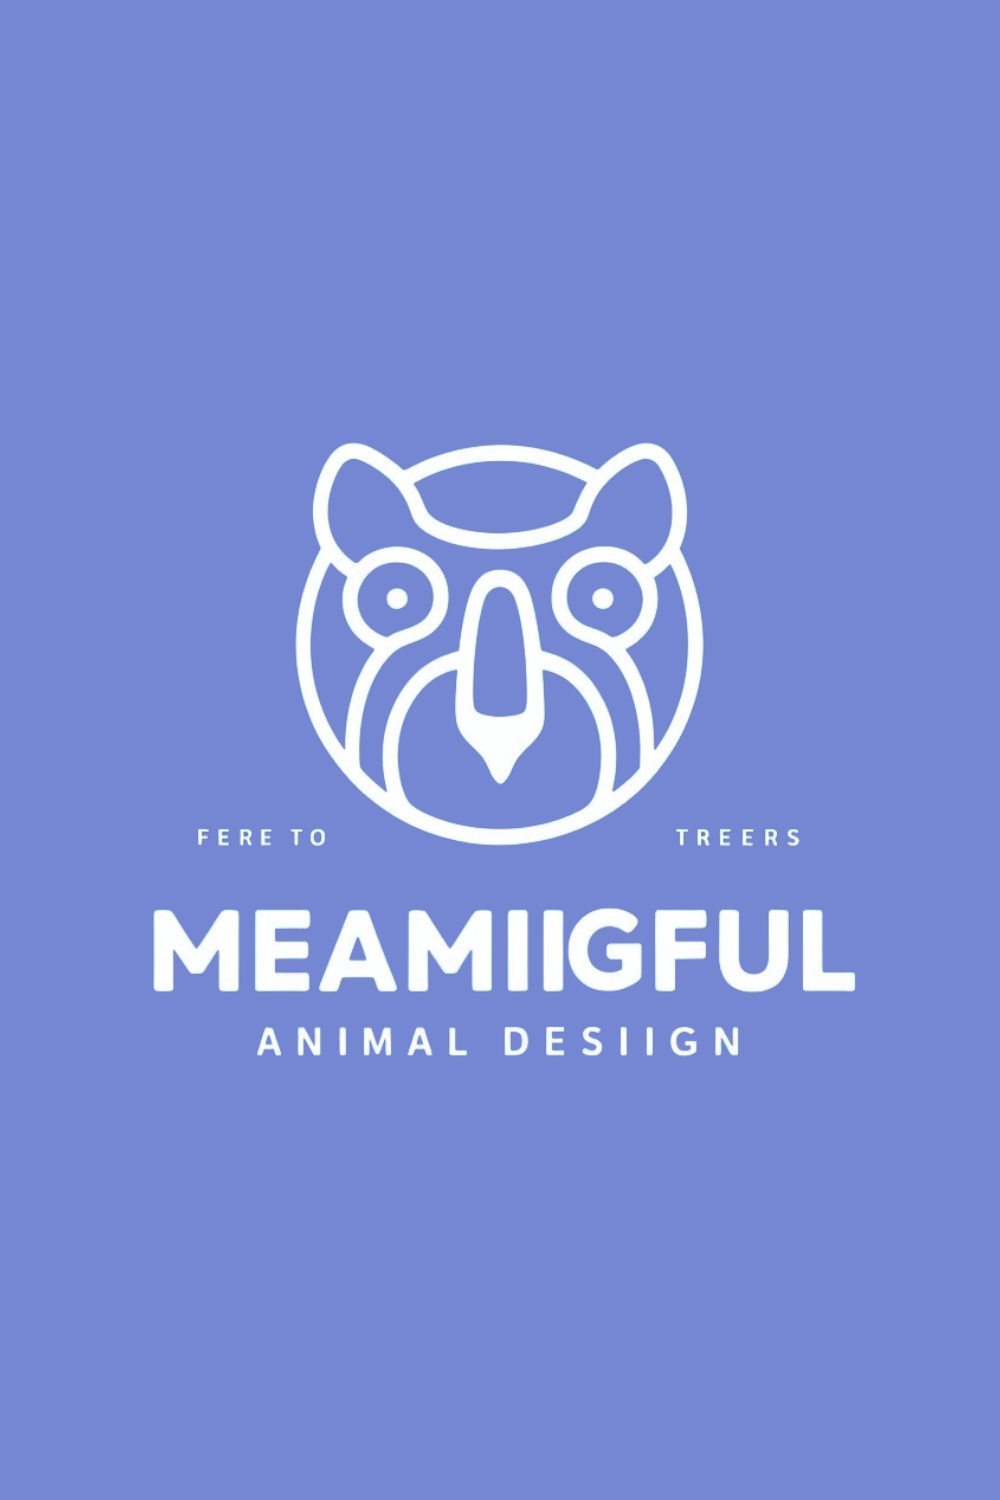 Animal logo design pinterest preview image.